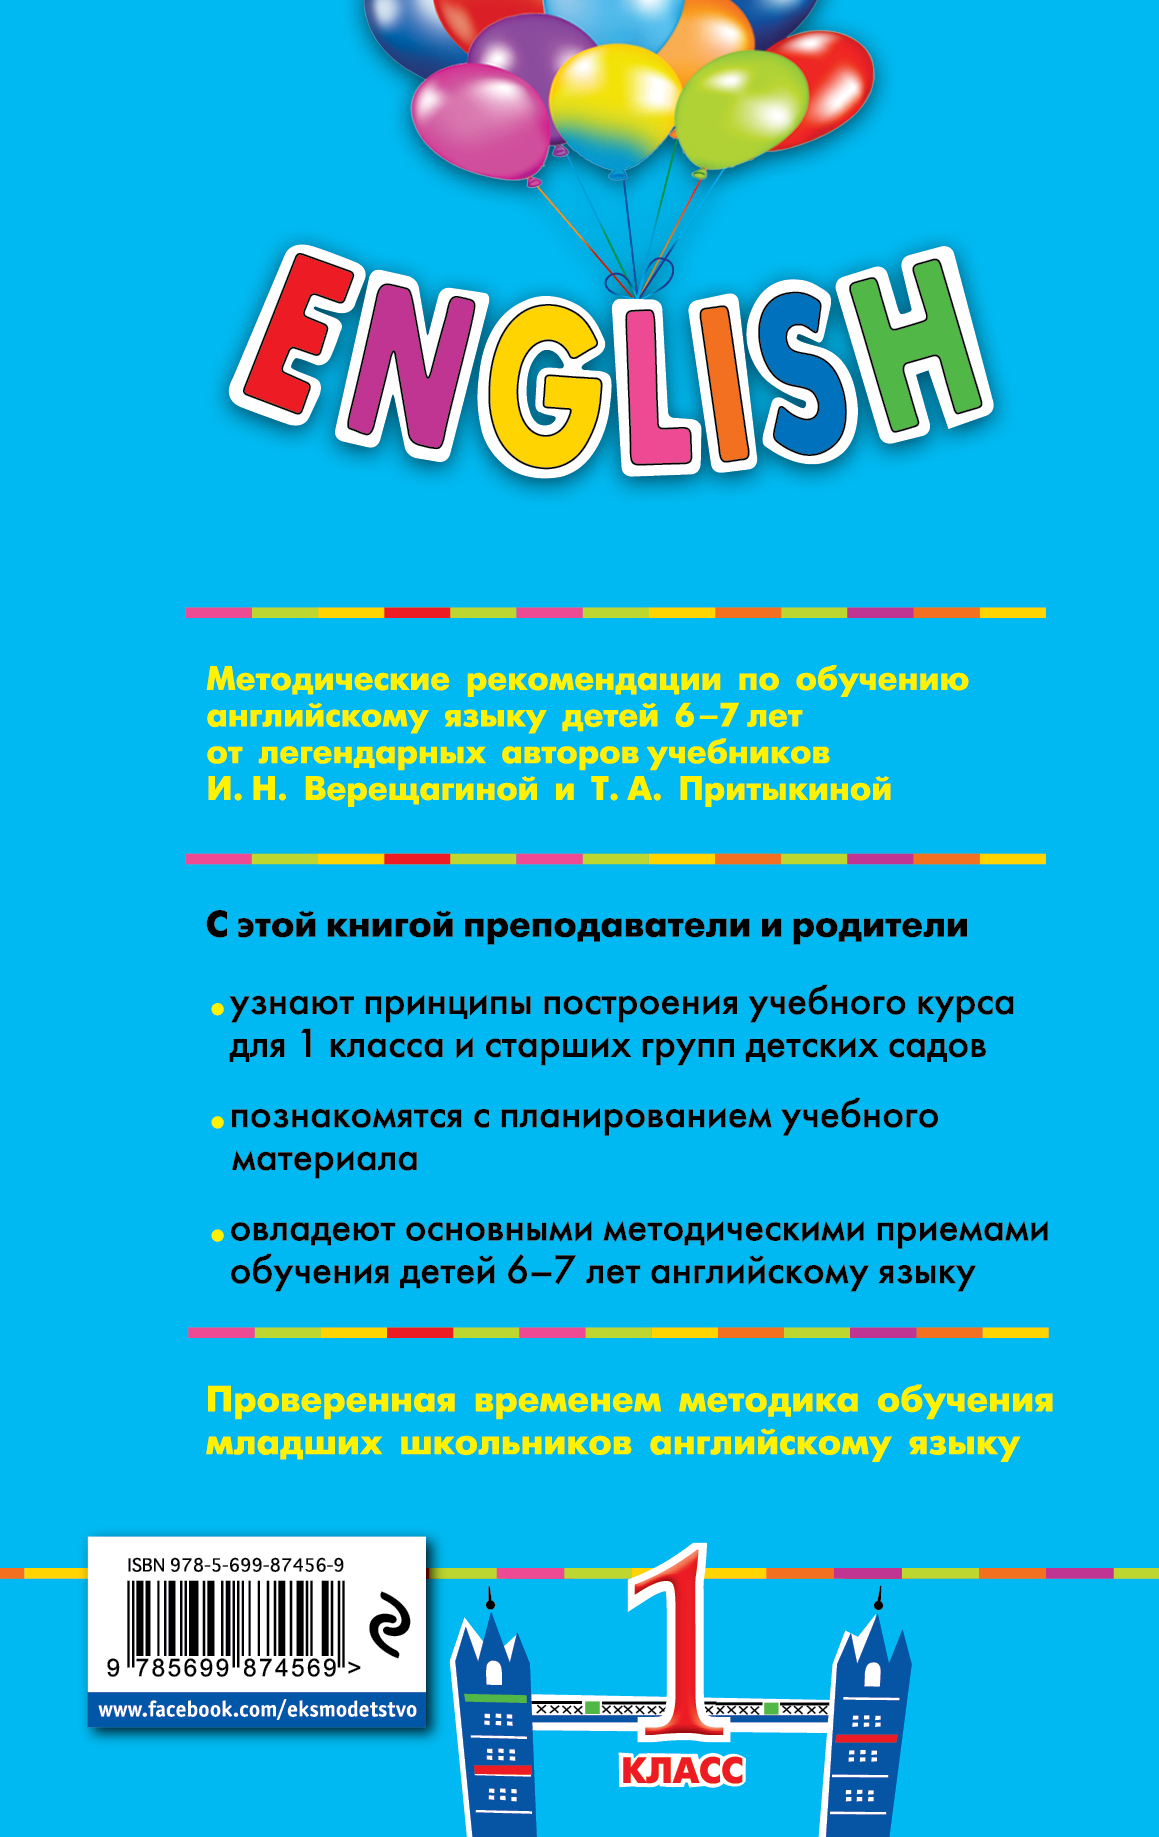 English. 1 .   